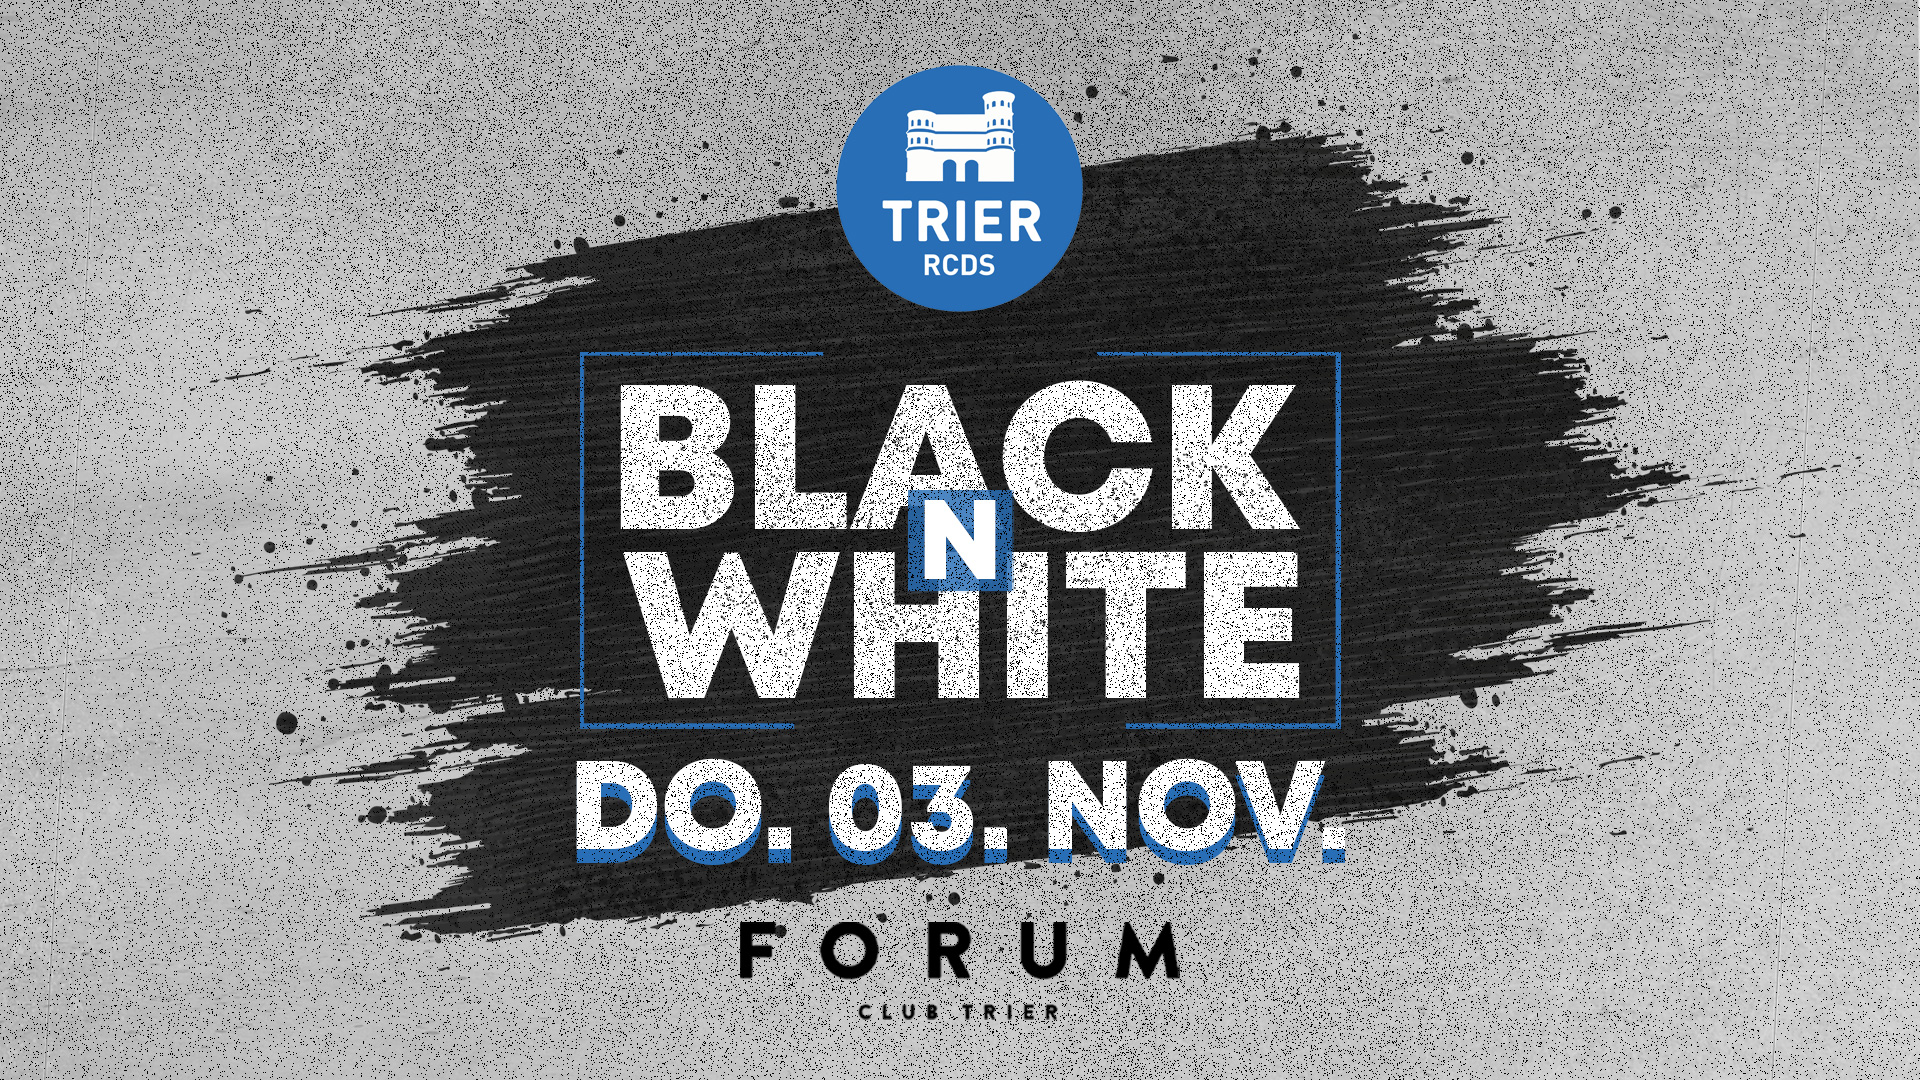 Forum Club Trier - Black and White